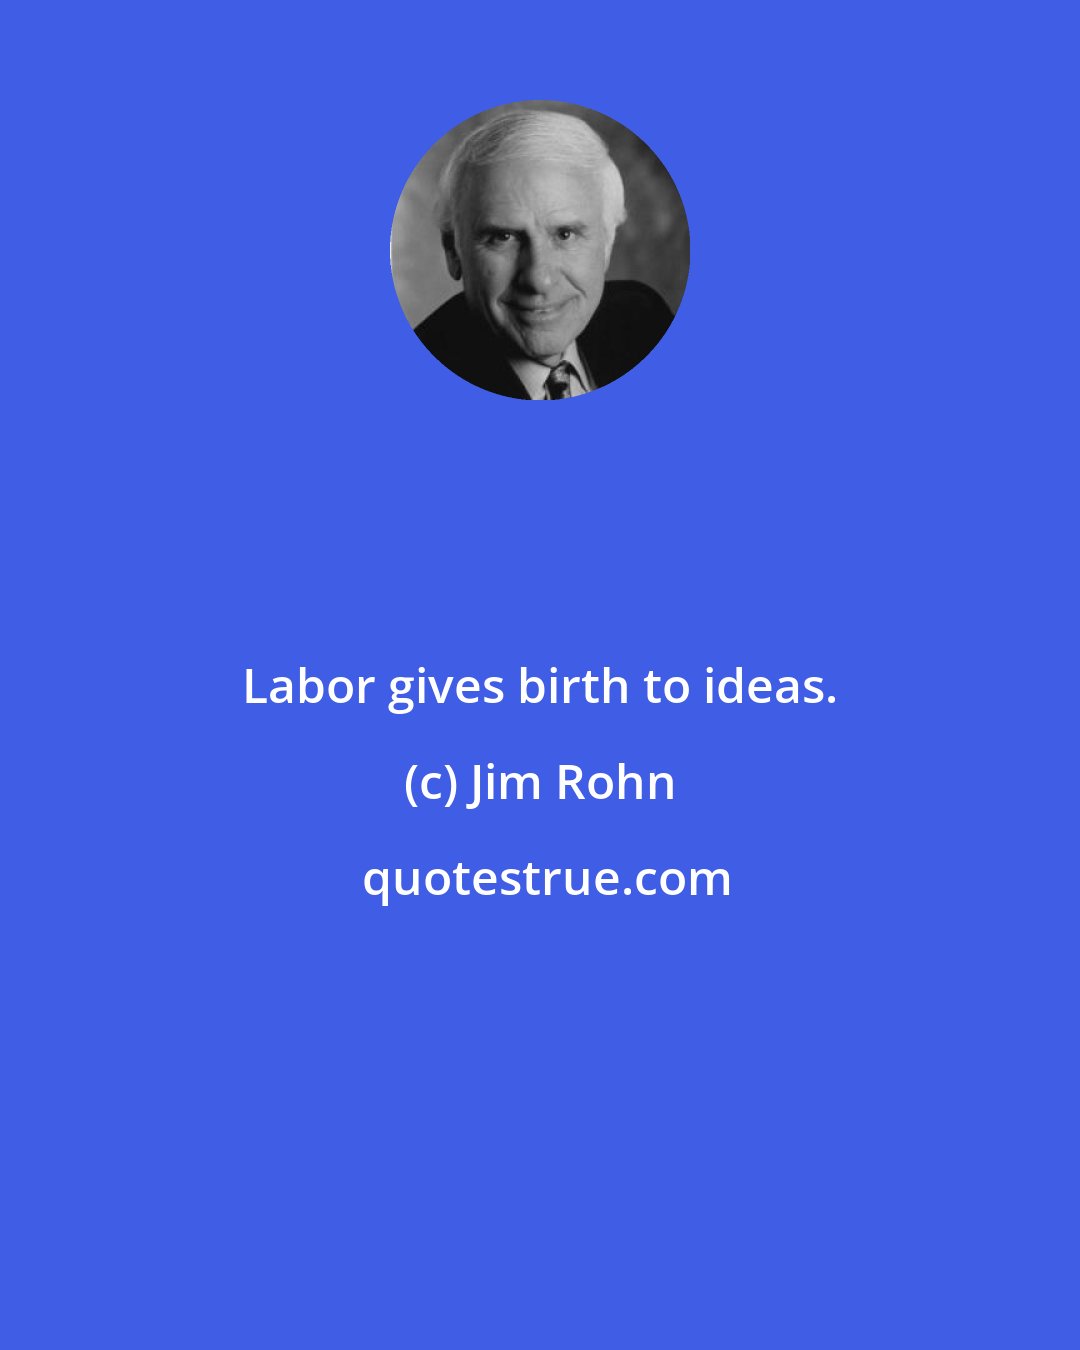 Jim Rohn: Labor gives birth to ideas.